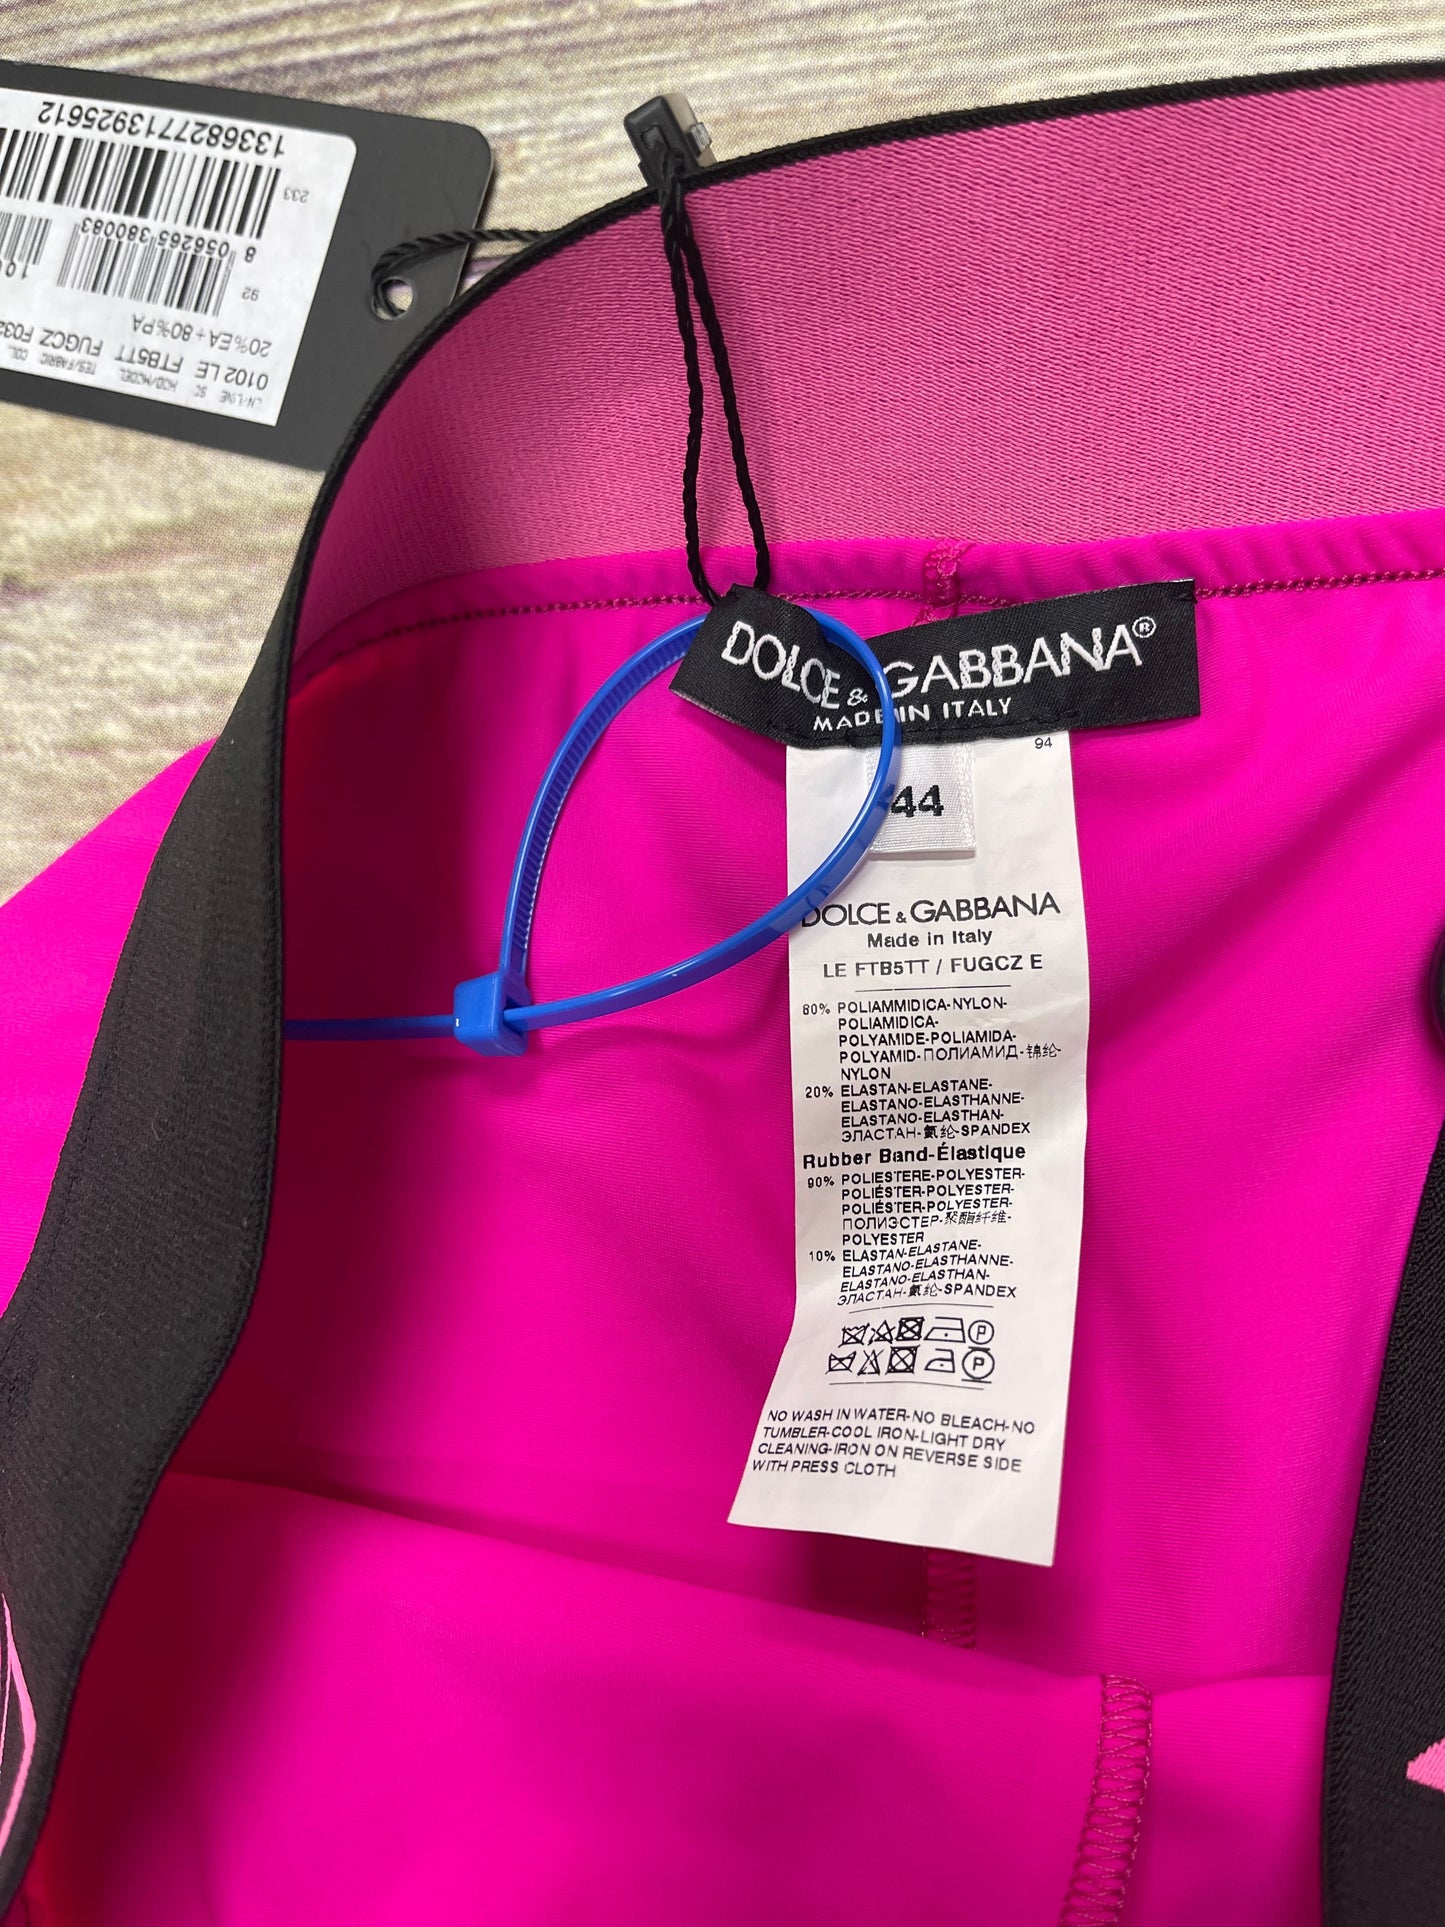 Pink Pants Luxury Designer Dolce And Gabbana, Size 12